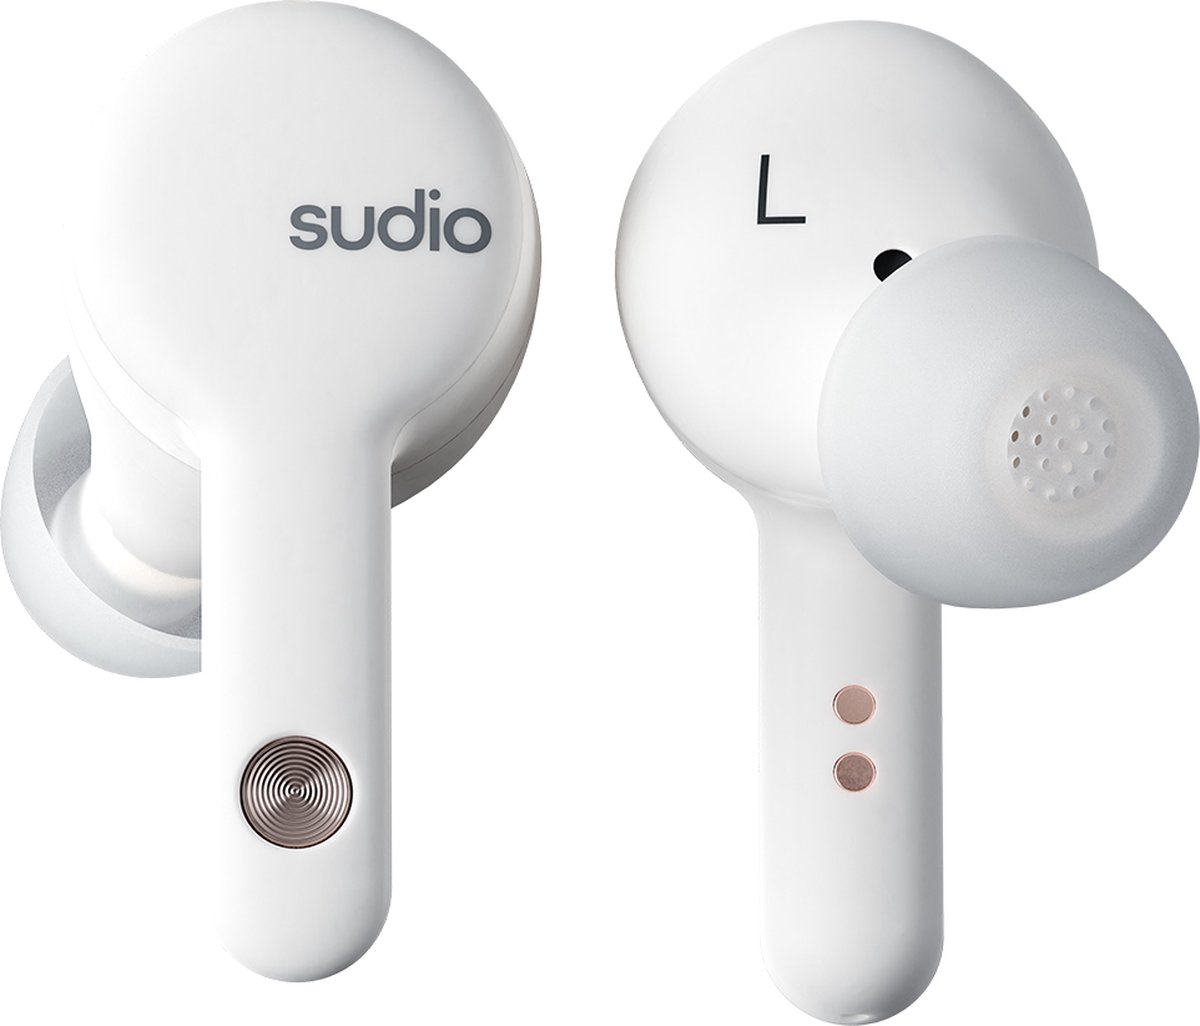 Sudio A2 in-ear true wireless earphones - draadloze oordopjes - met active noice cancellation (ANC) - wit